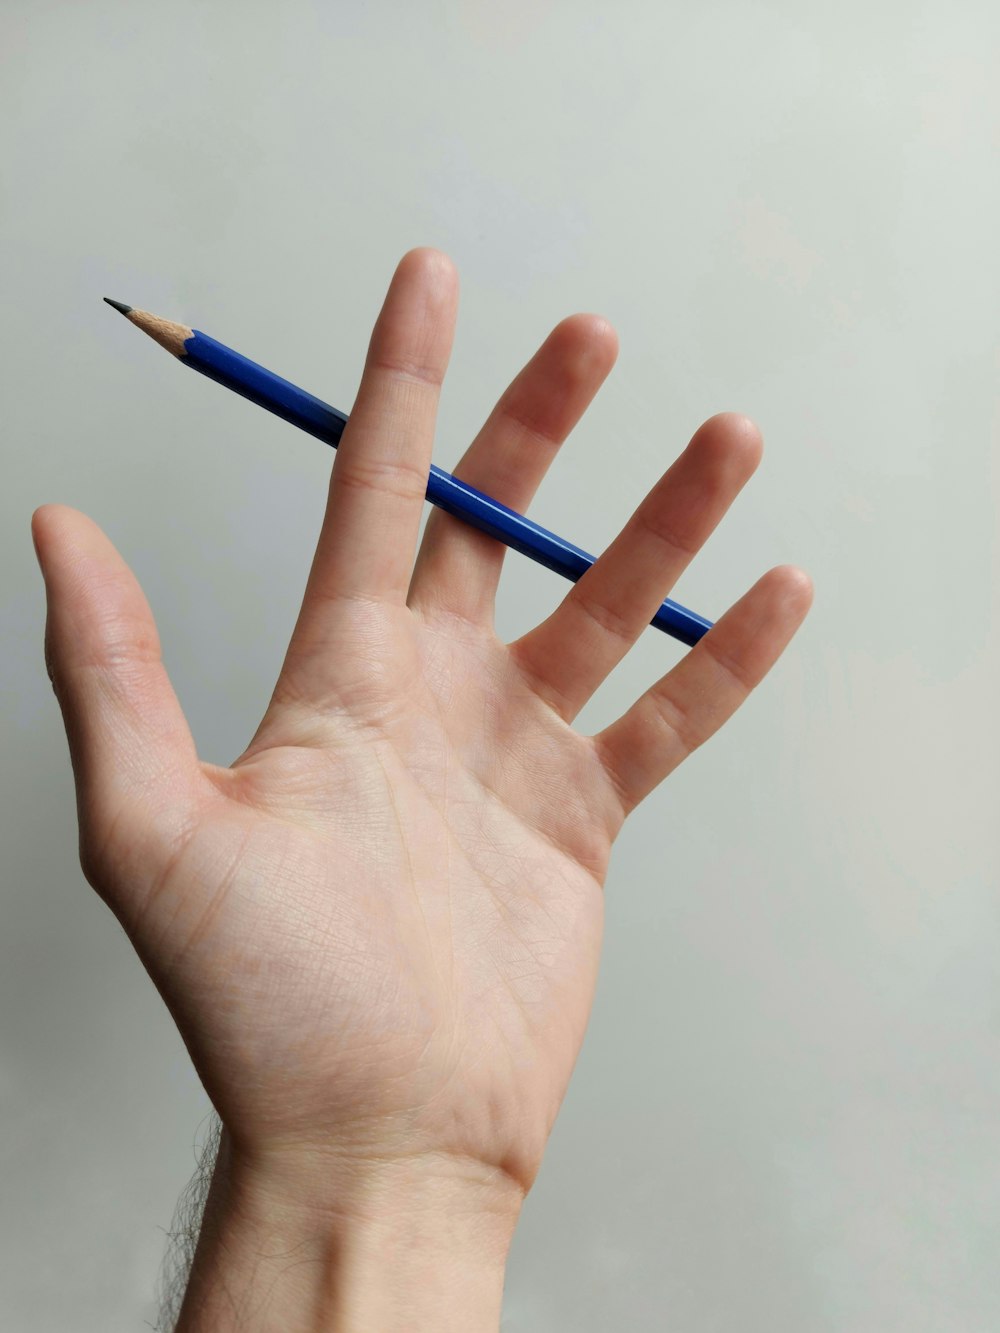 personne tenant un crayon bleu dans la main gauche